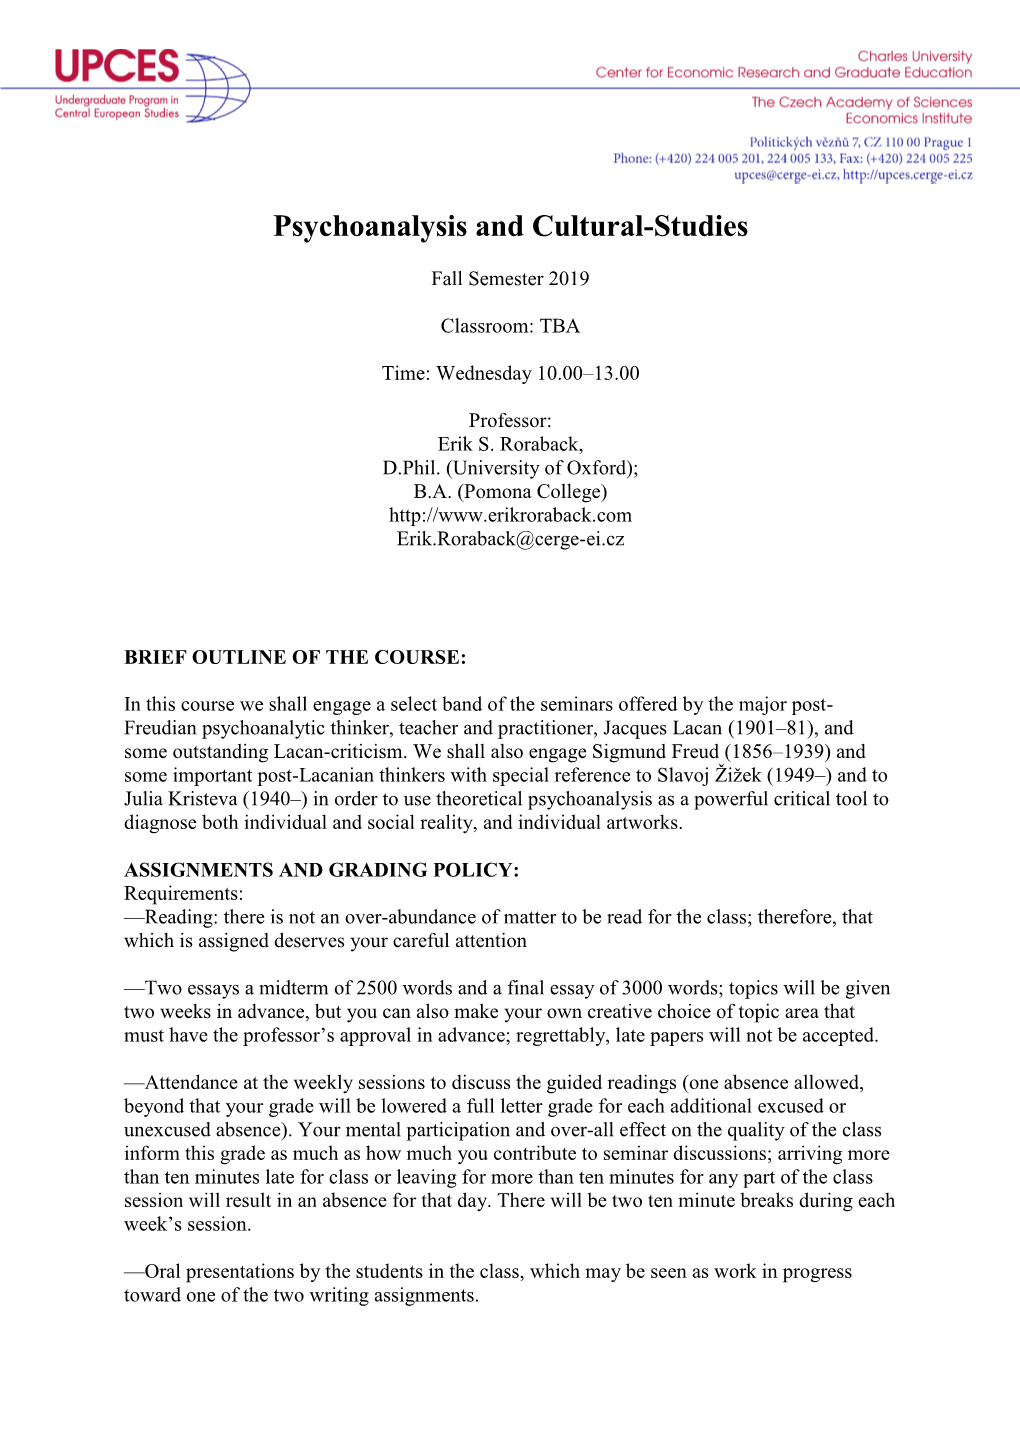 Psychoanalysis and Cultural-Studies